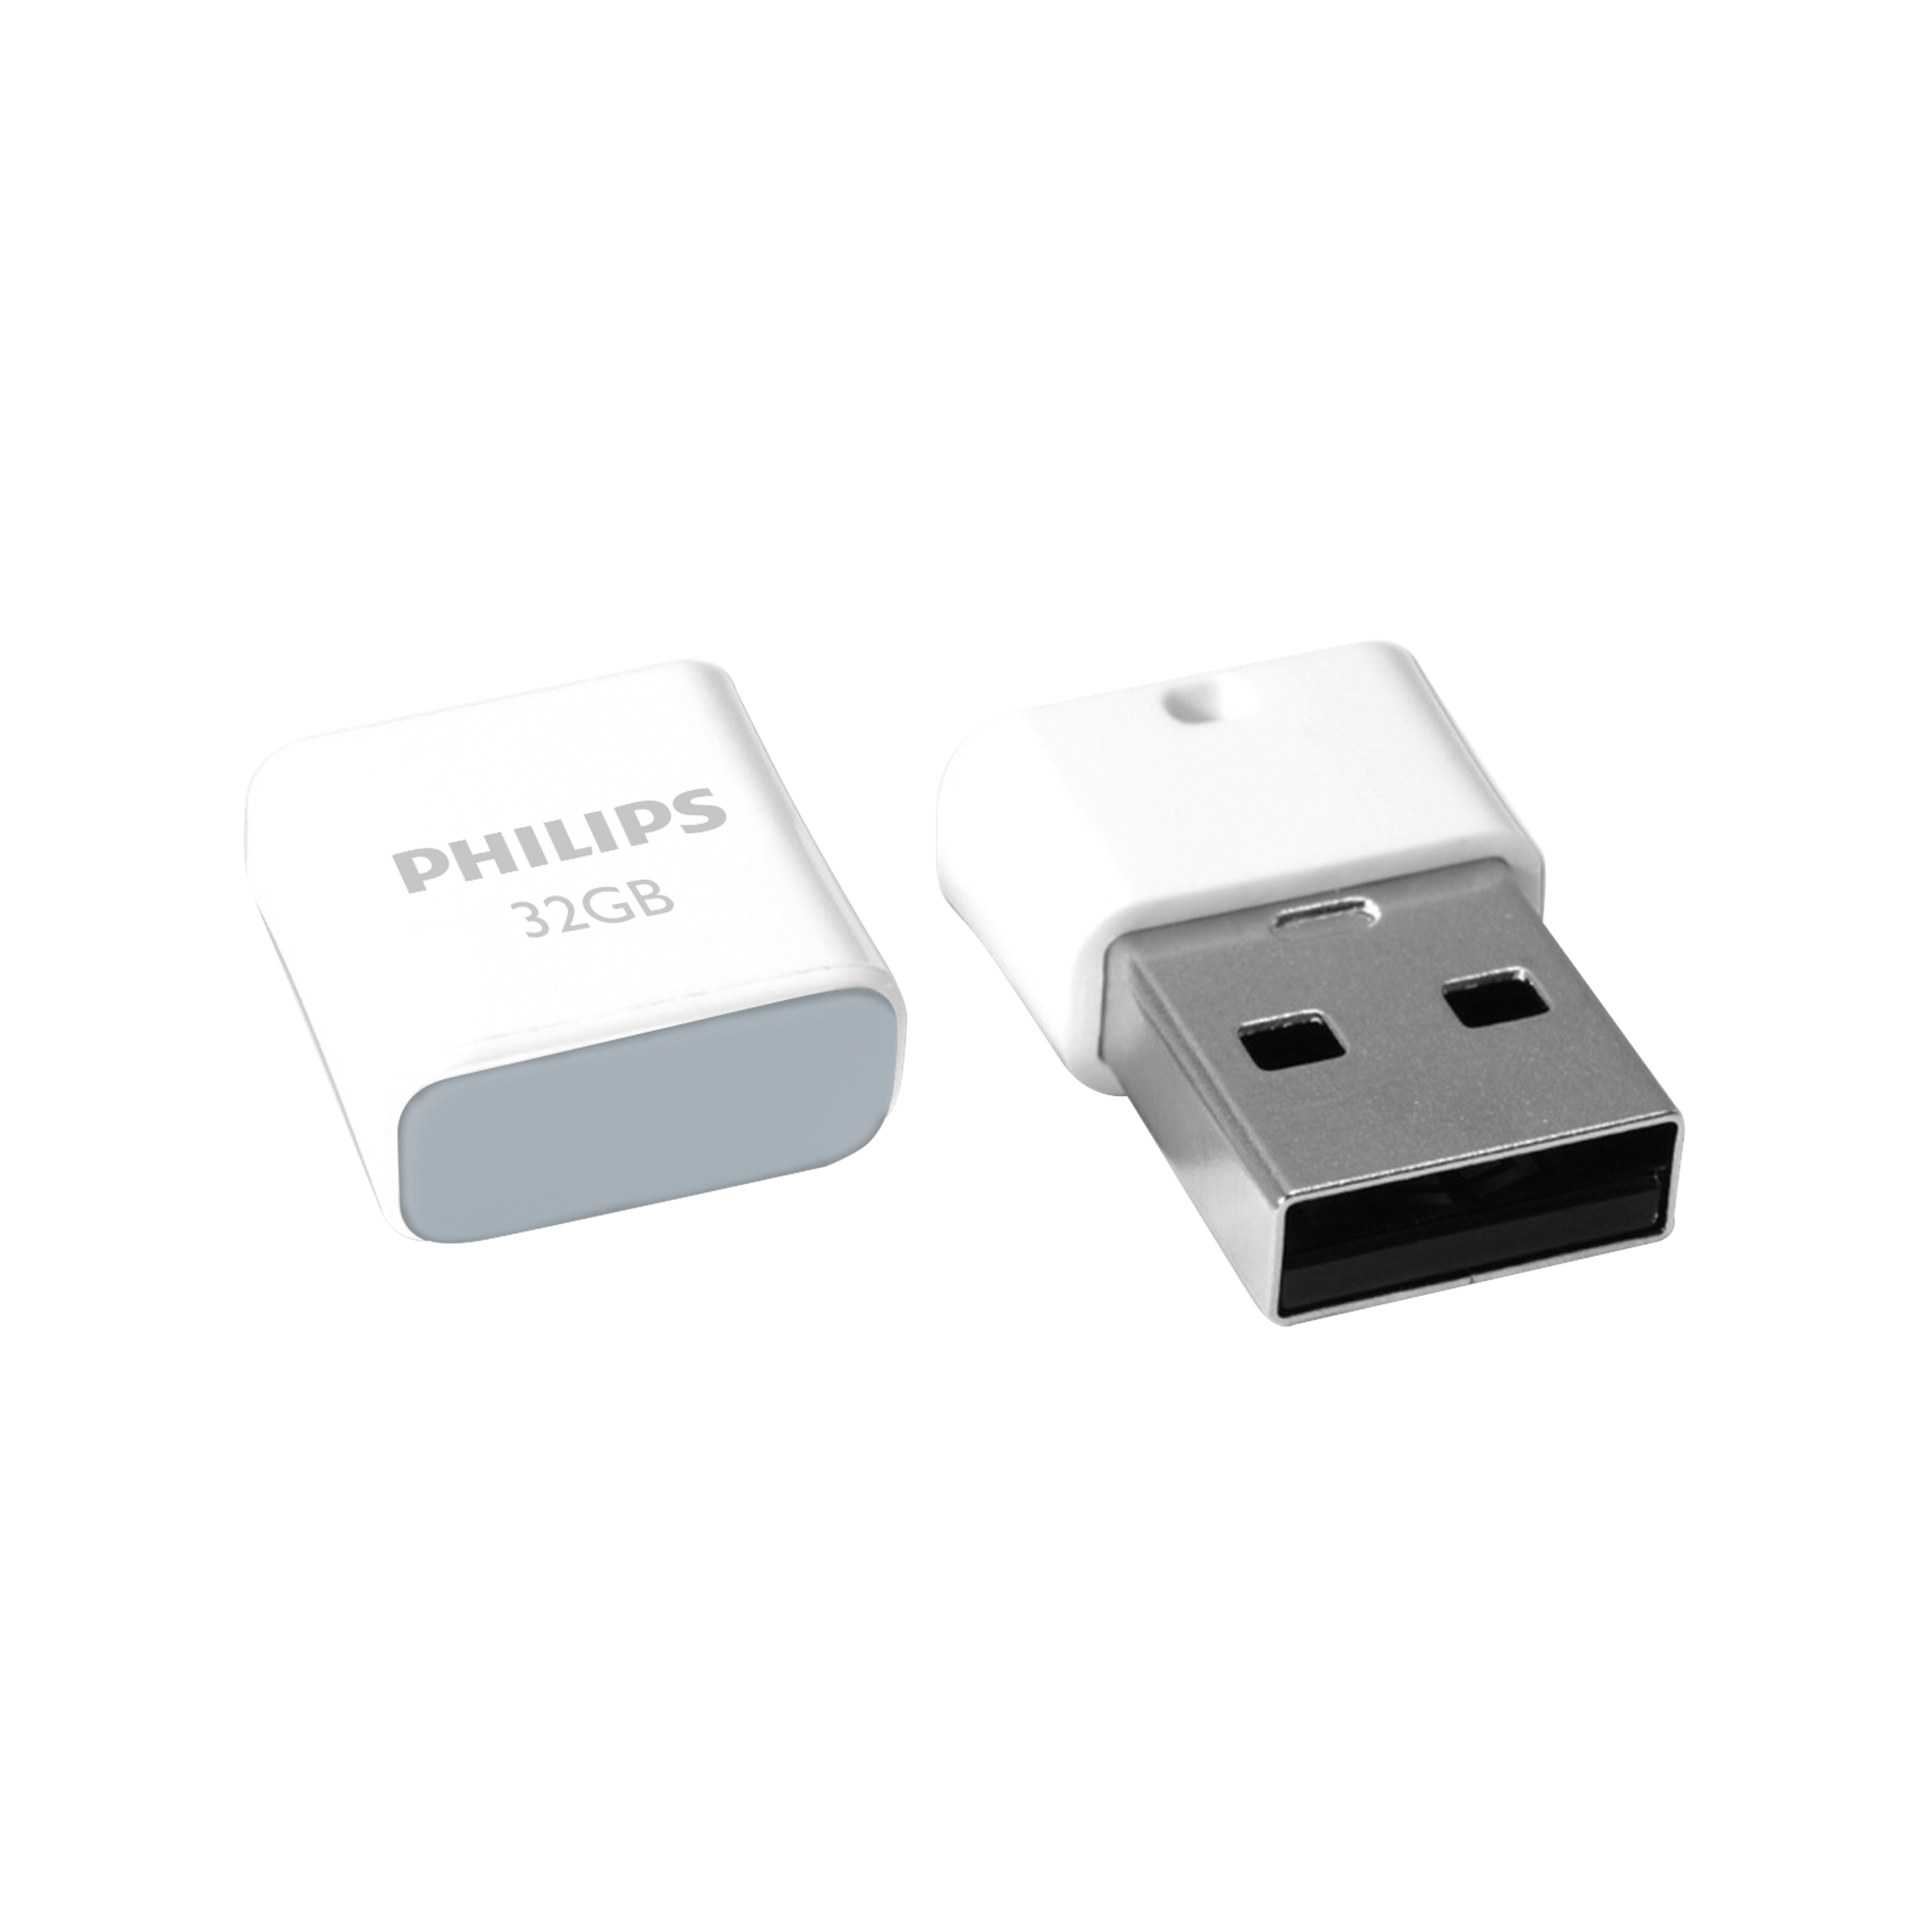 Edition Pico 32 PHILIPS GB) (Weiß, USB-Stick